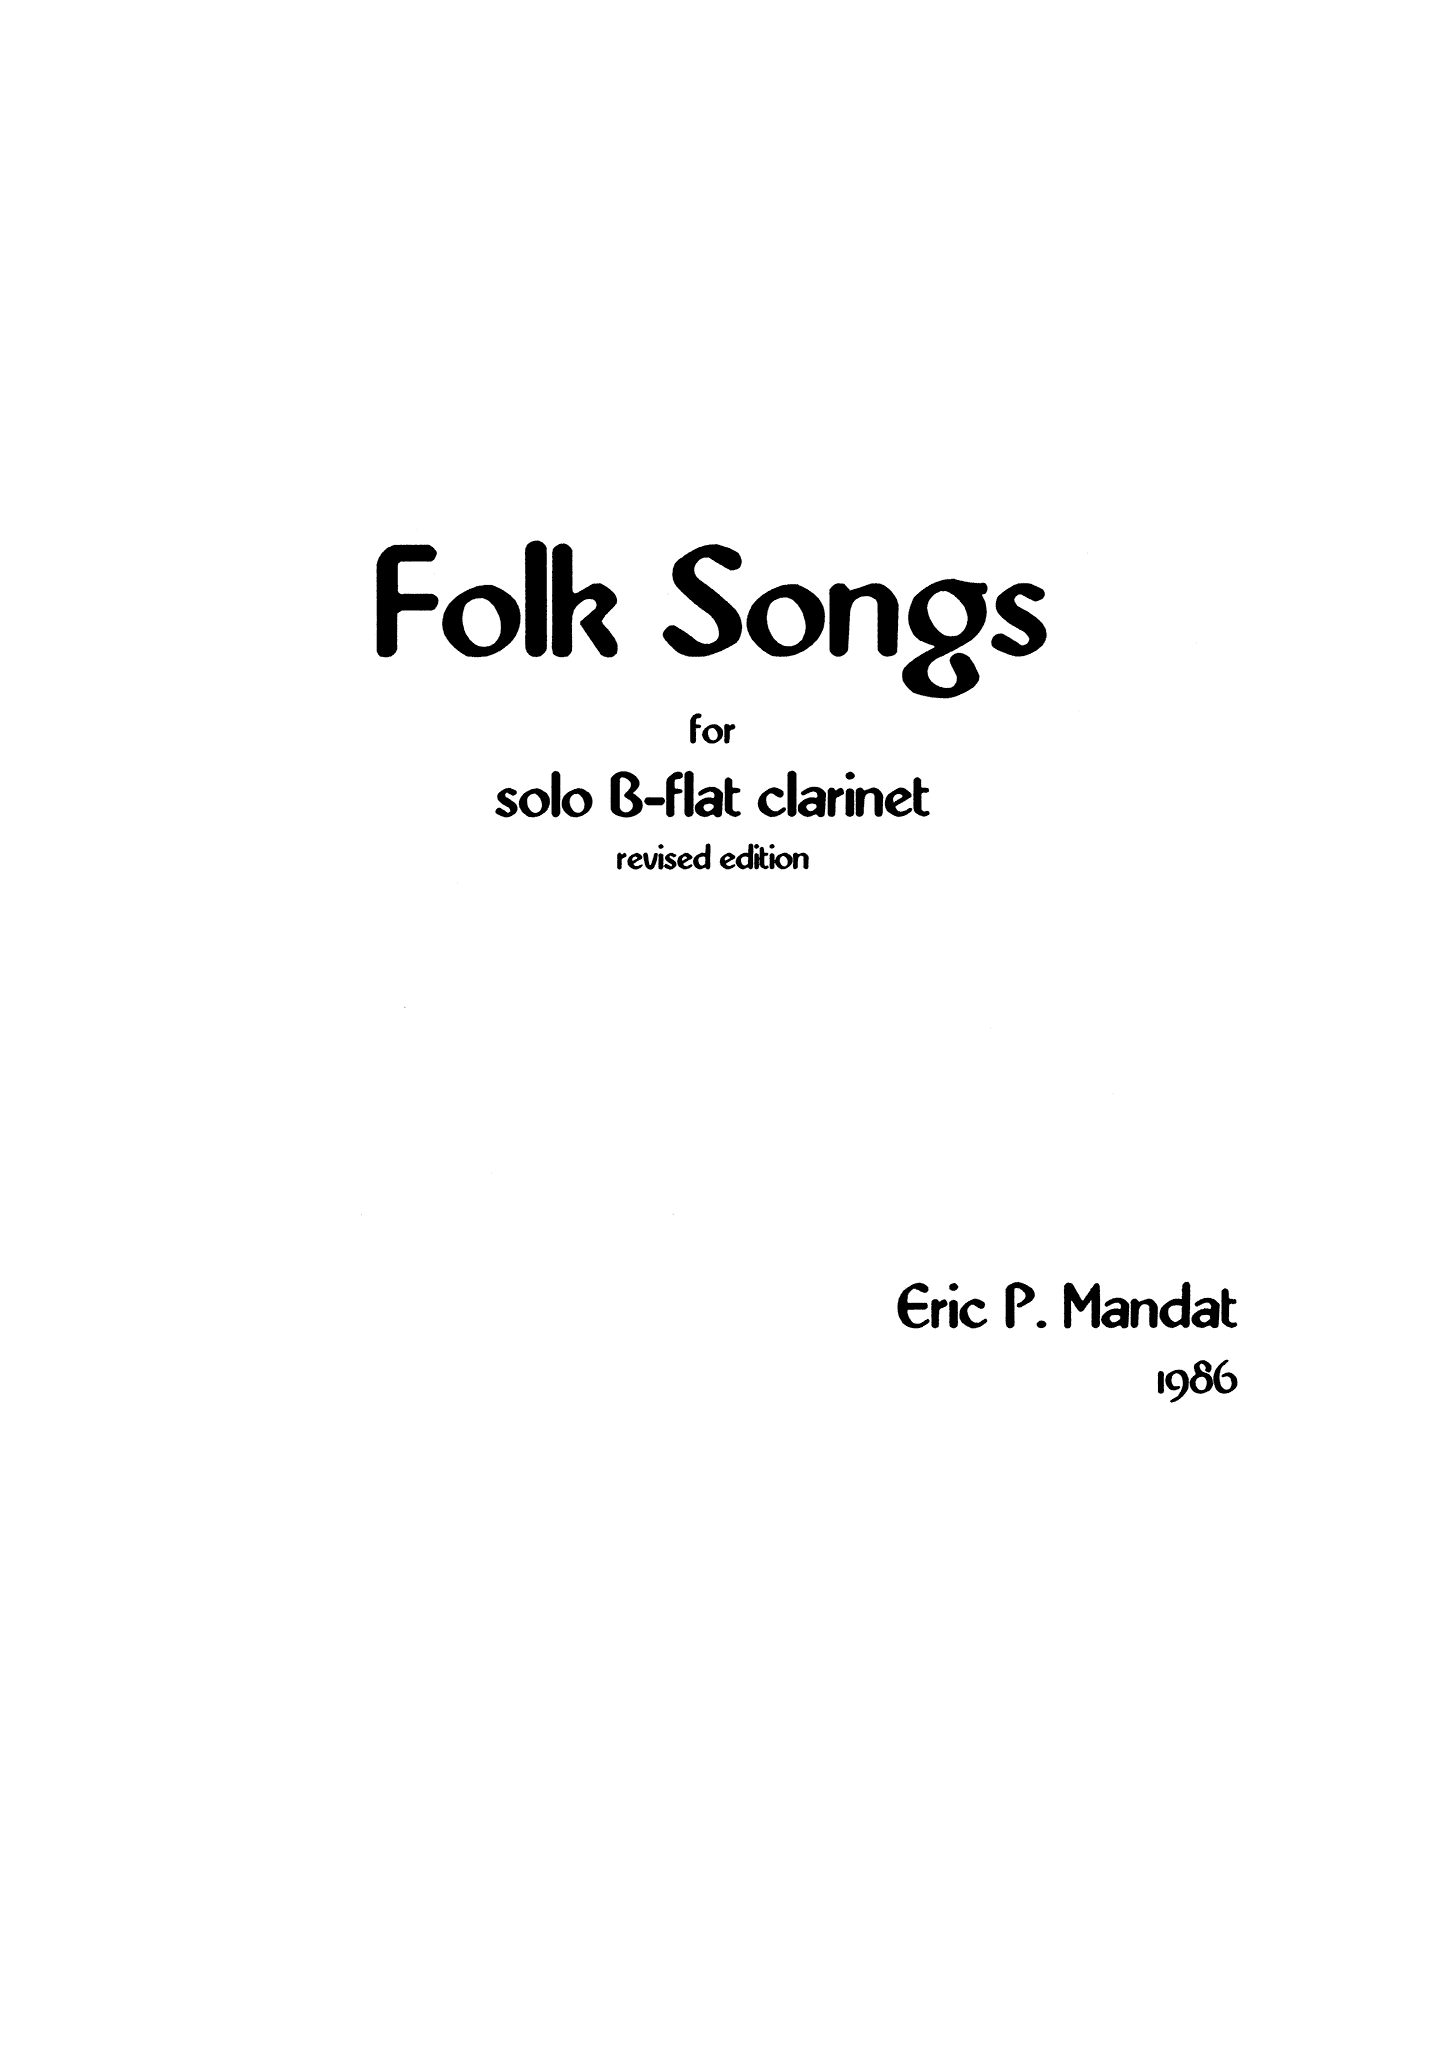 Mandat Folk Songs unaccompanied clarinet cover